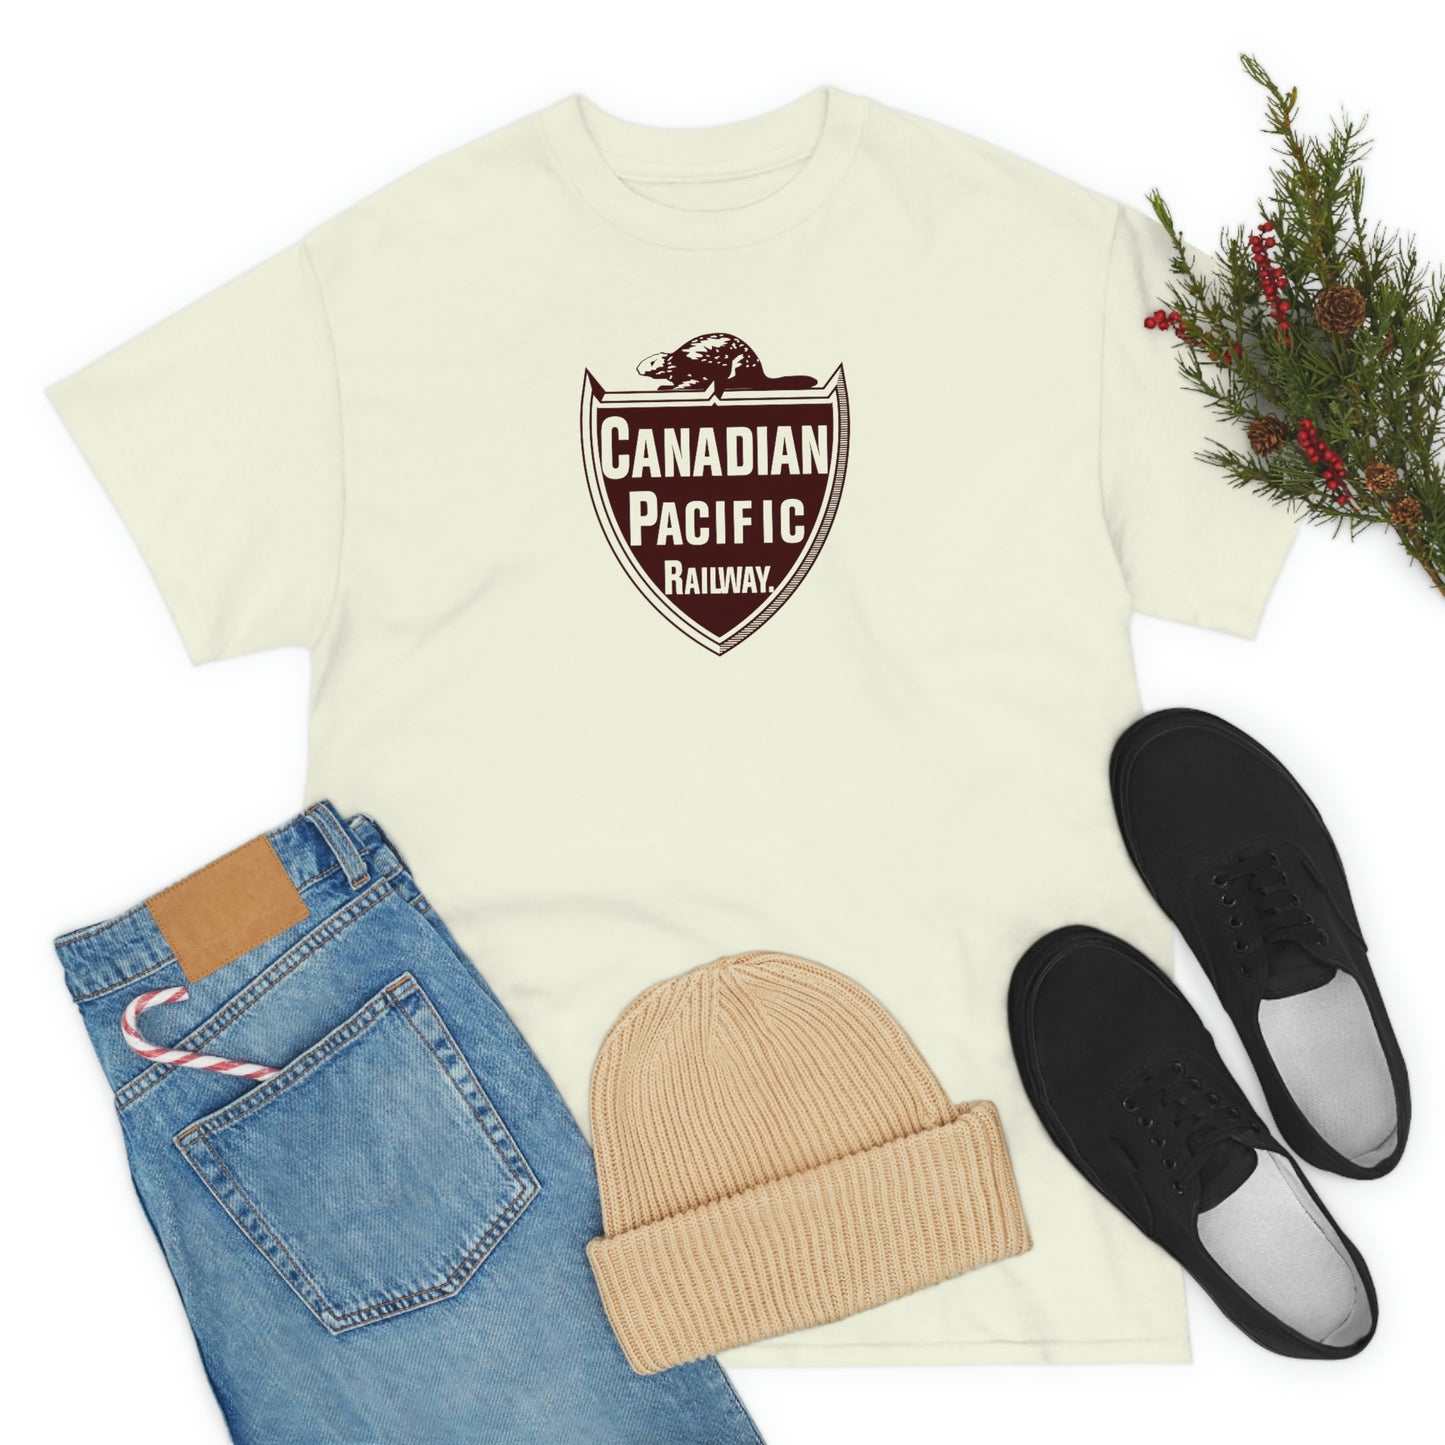 Canadian Pacific Railway T-Shirt